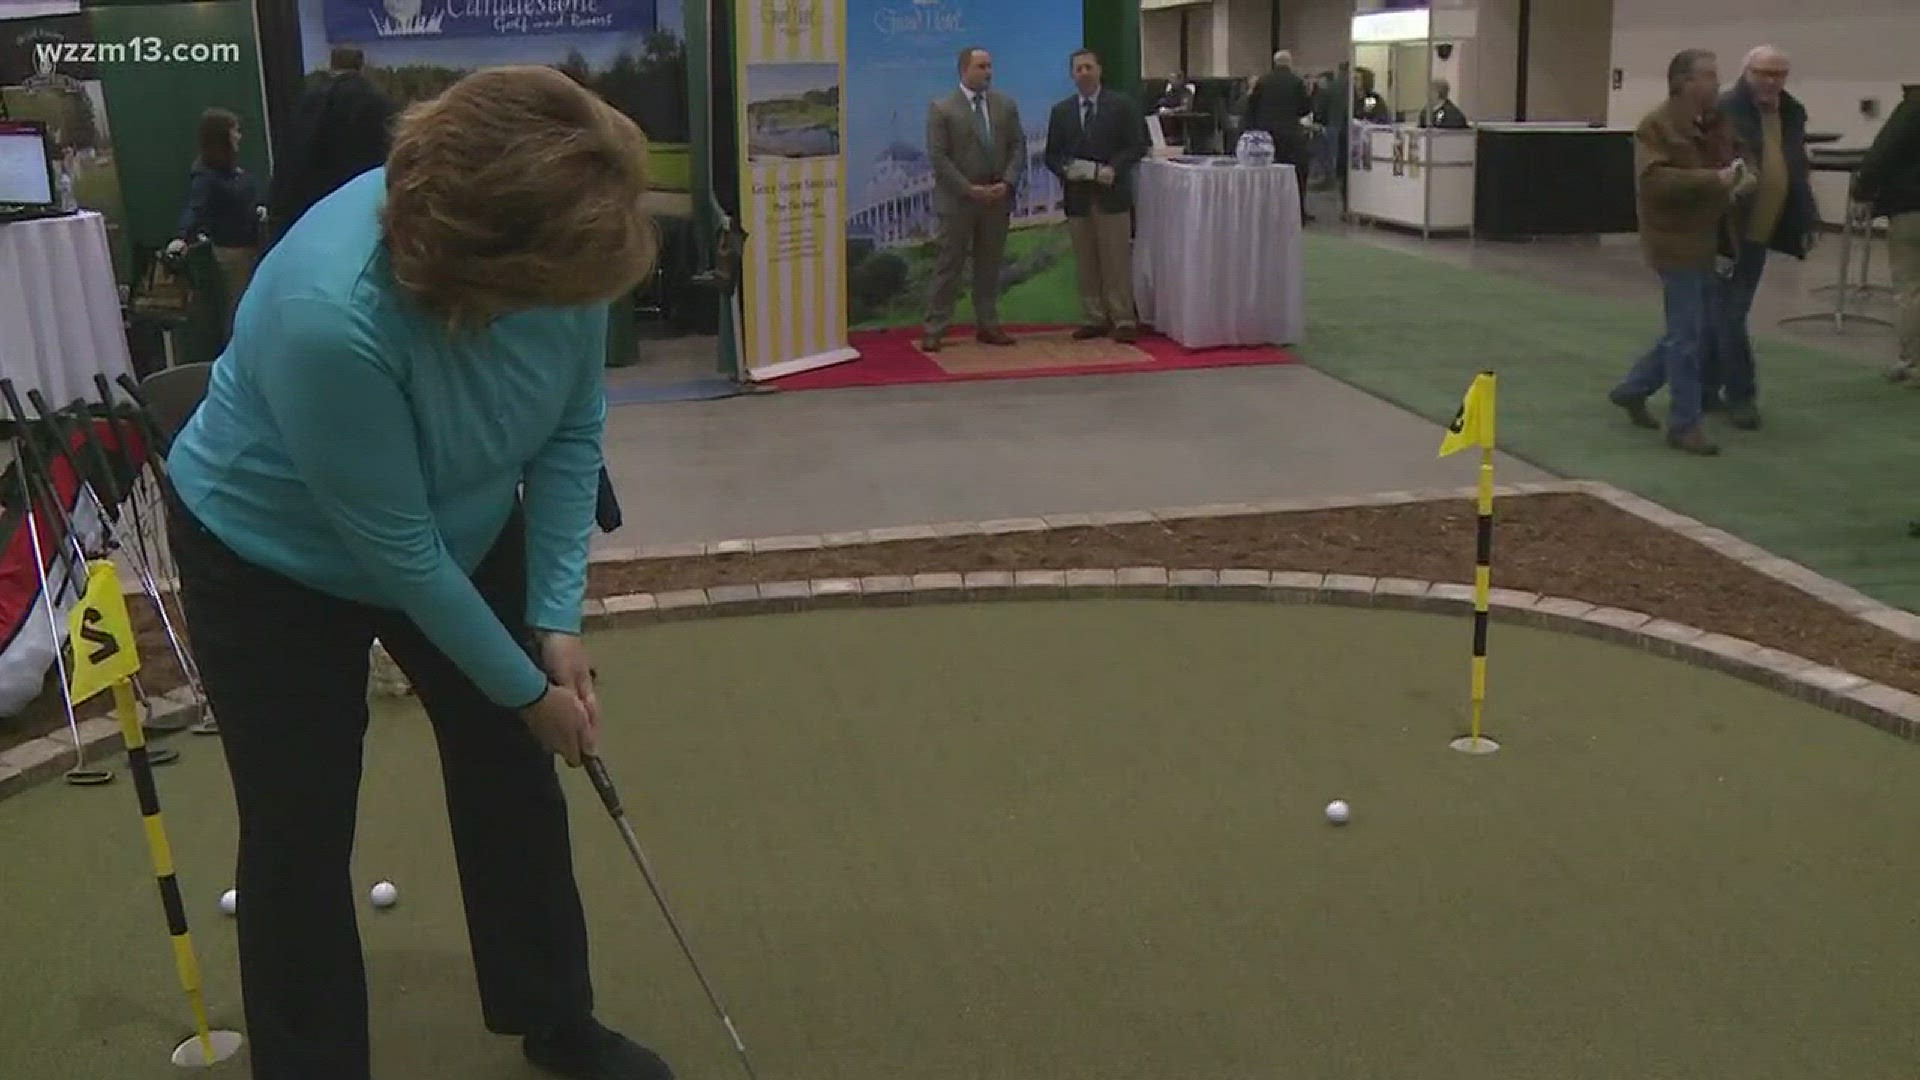 LPGA Hall of Famer Meg Mallon featured at West Michigan Golf Show